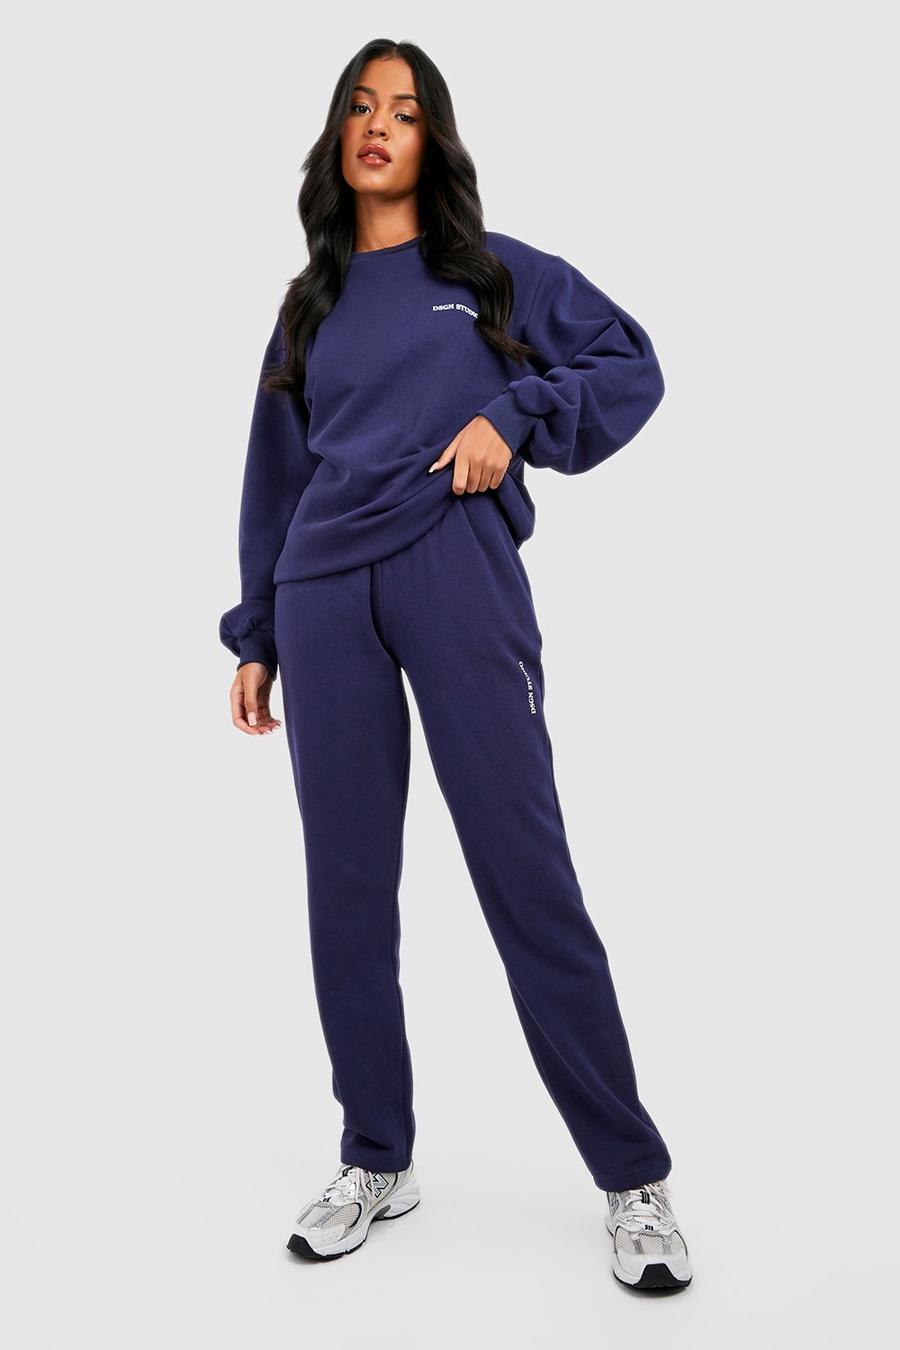 Navy Women Track Suit, Wide Leg Pants Set, Sweatshirt Track Suit